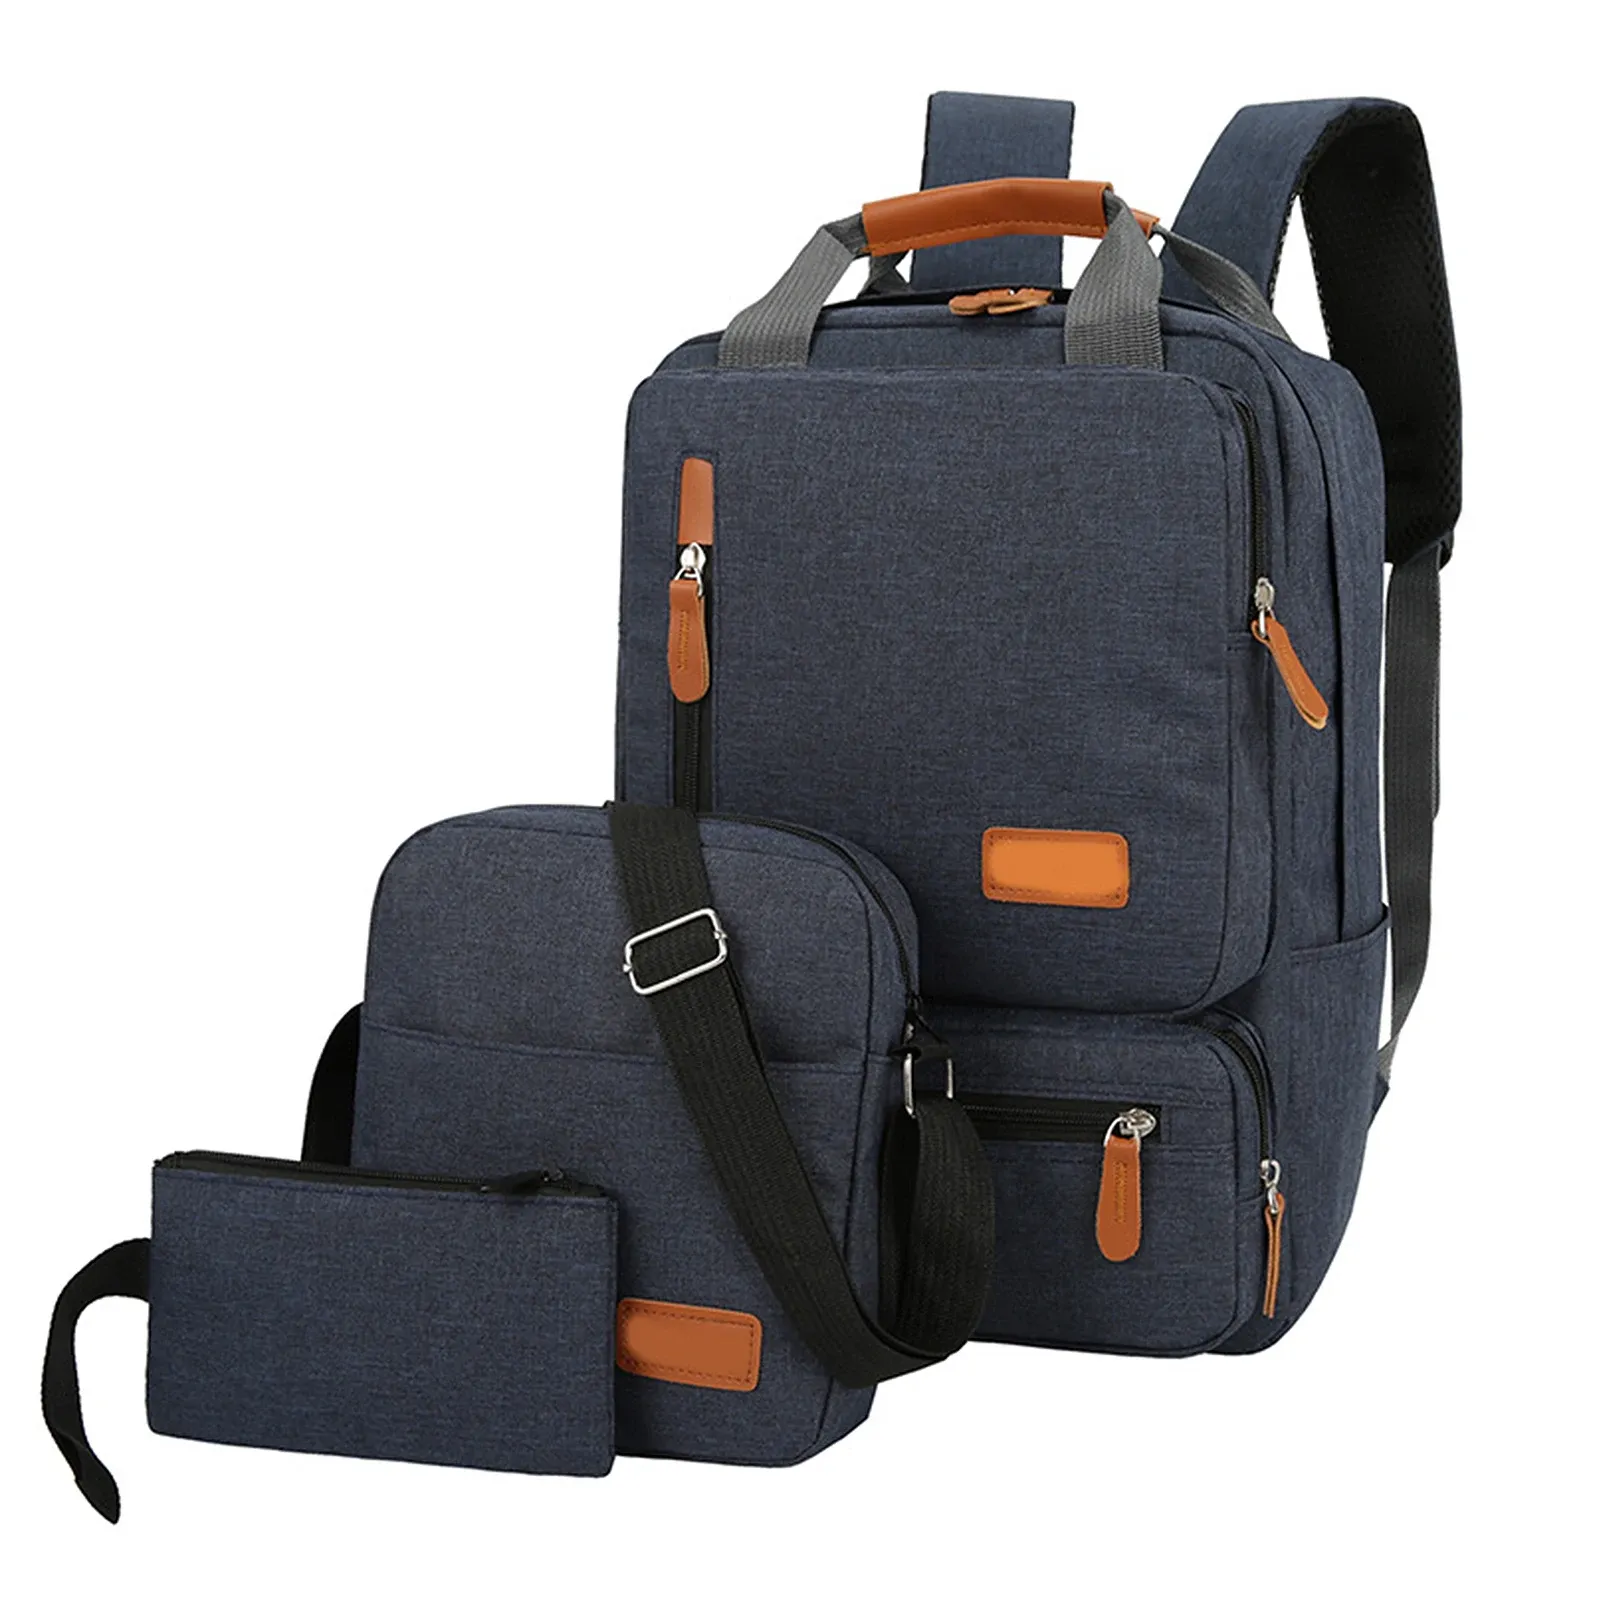 Bags 3pcs Backpack Set Women Men Laptop Backpack Shoulder Bag Small Pocket for Travel School Business Work College Fits Up to 14.5in